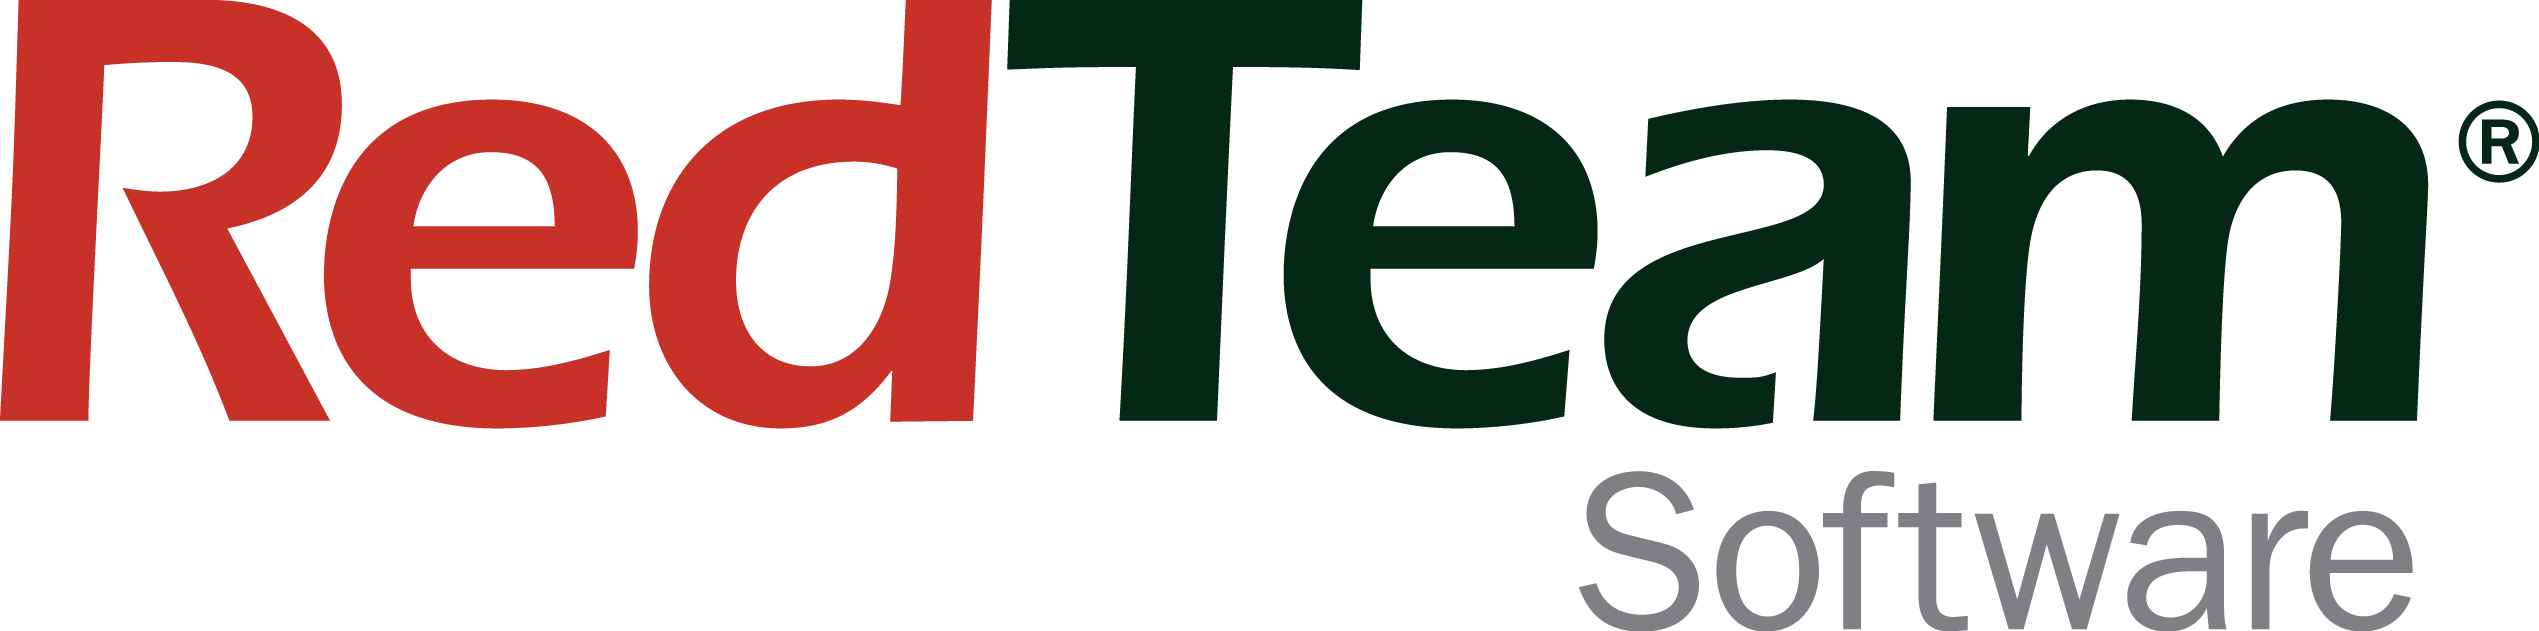 redteam-logo normal (1).png